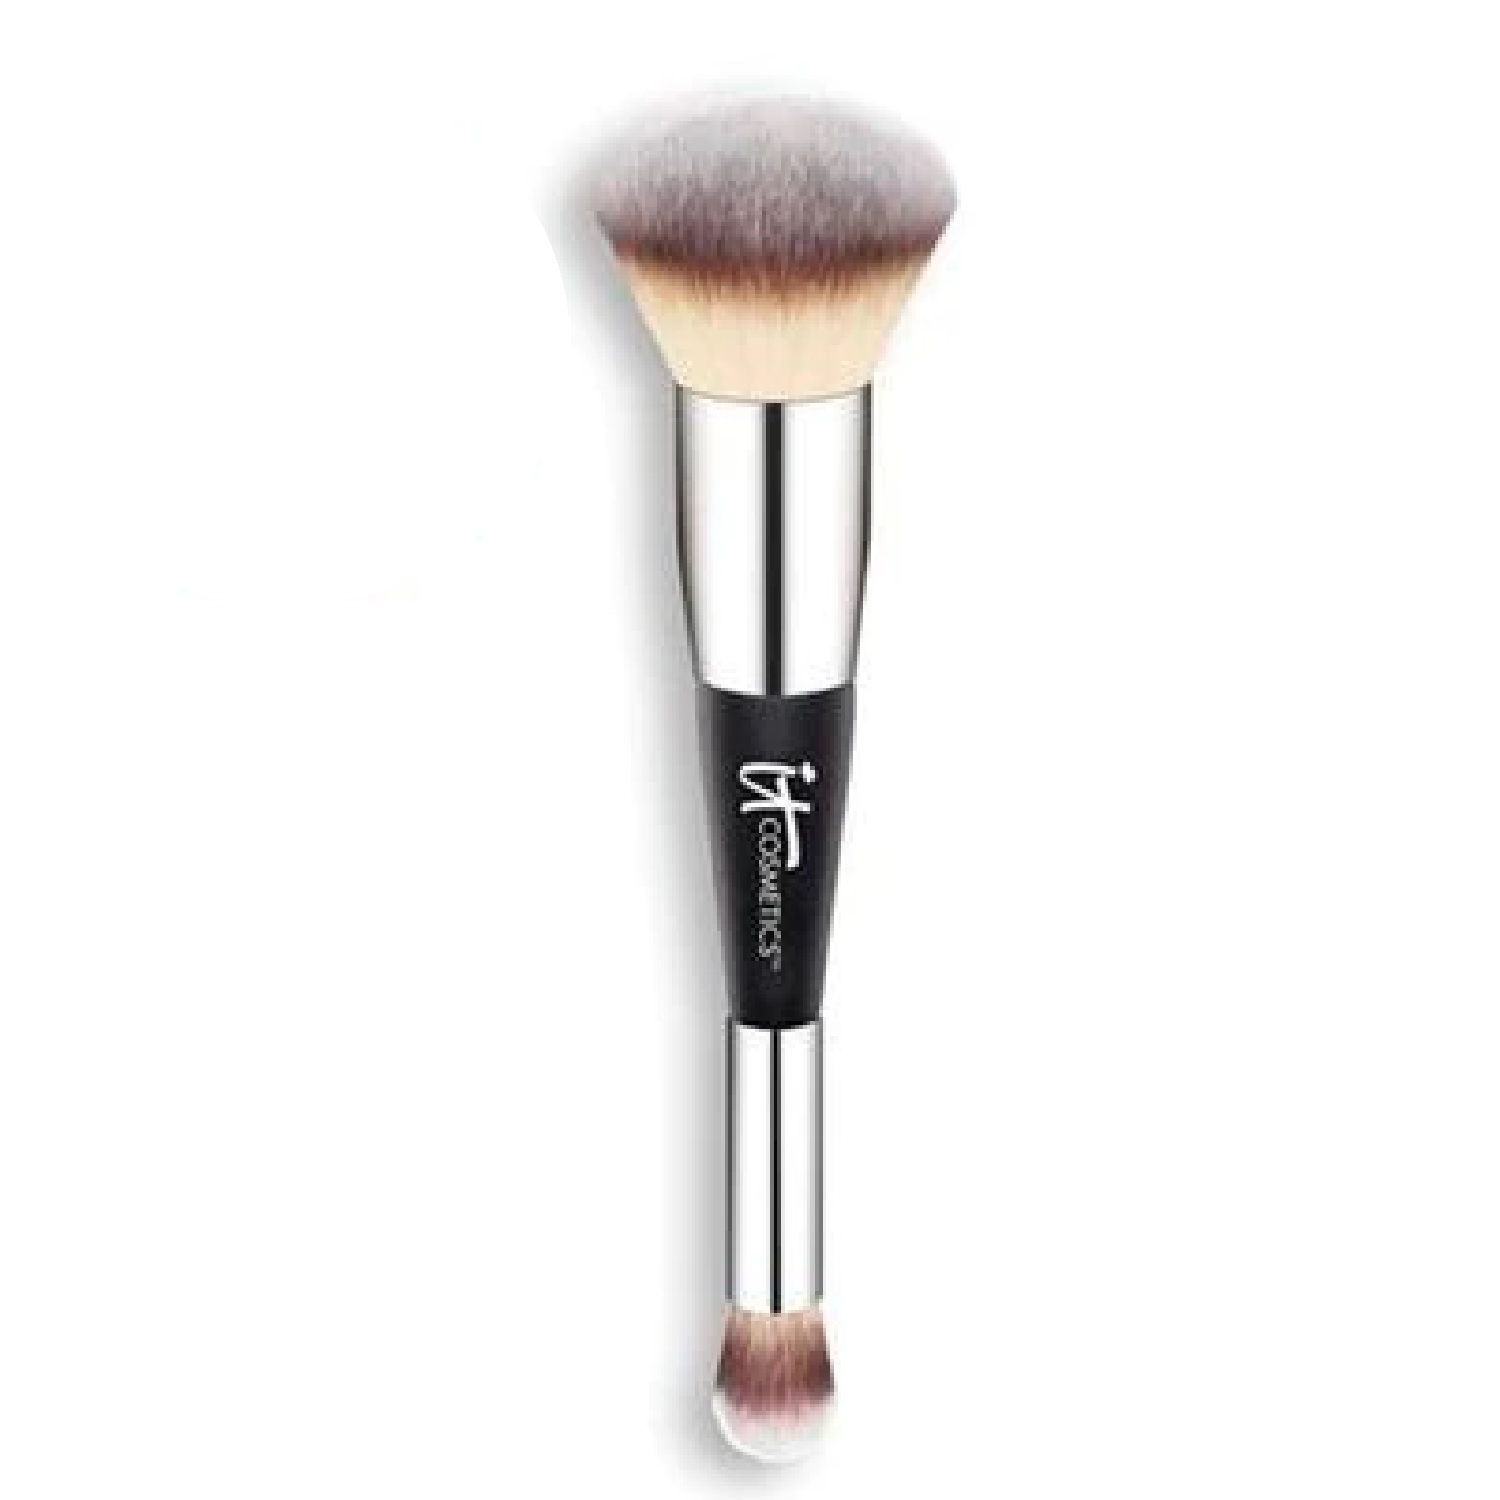 heavenly luxe™ - complexion perfection brush #7 (brocha de maquillaje)